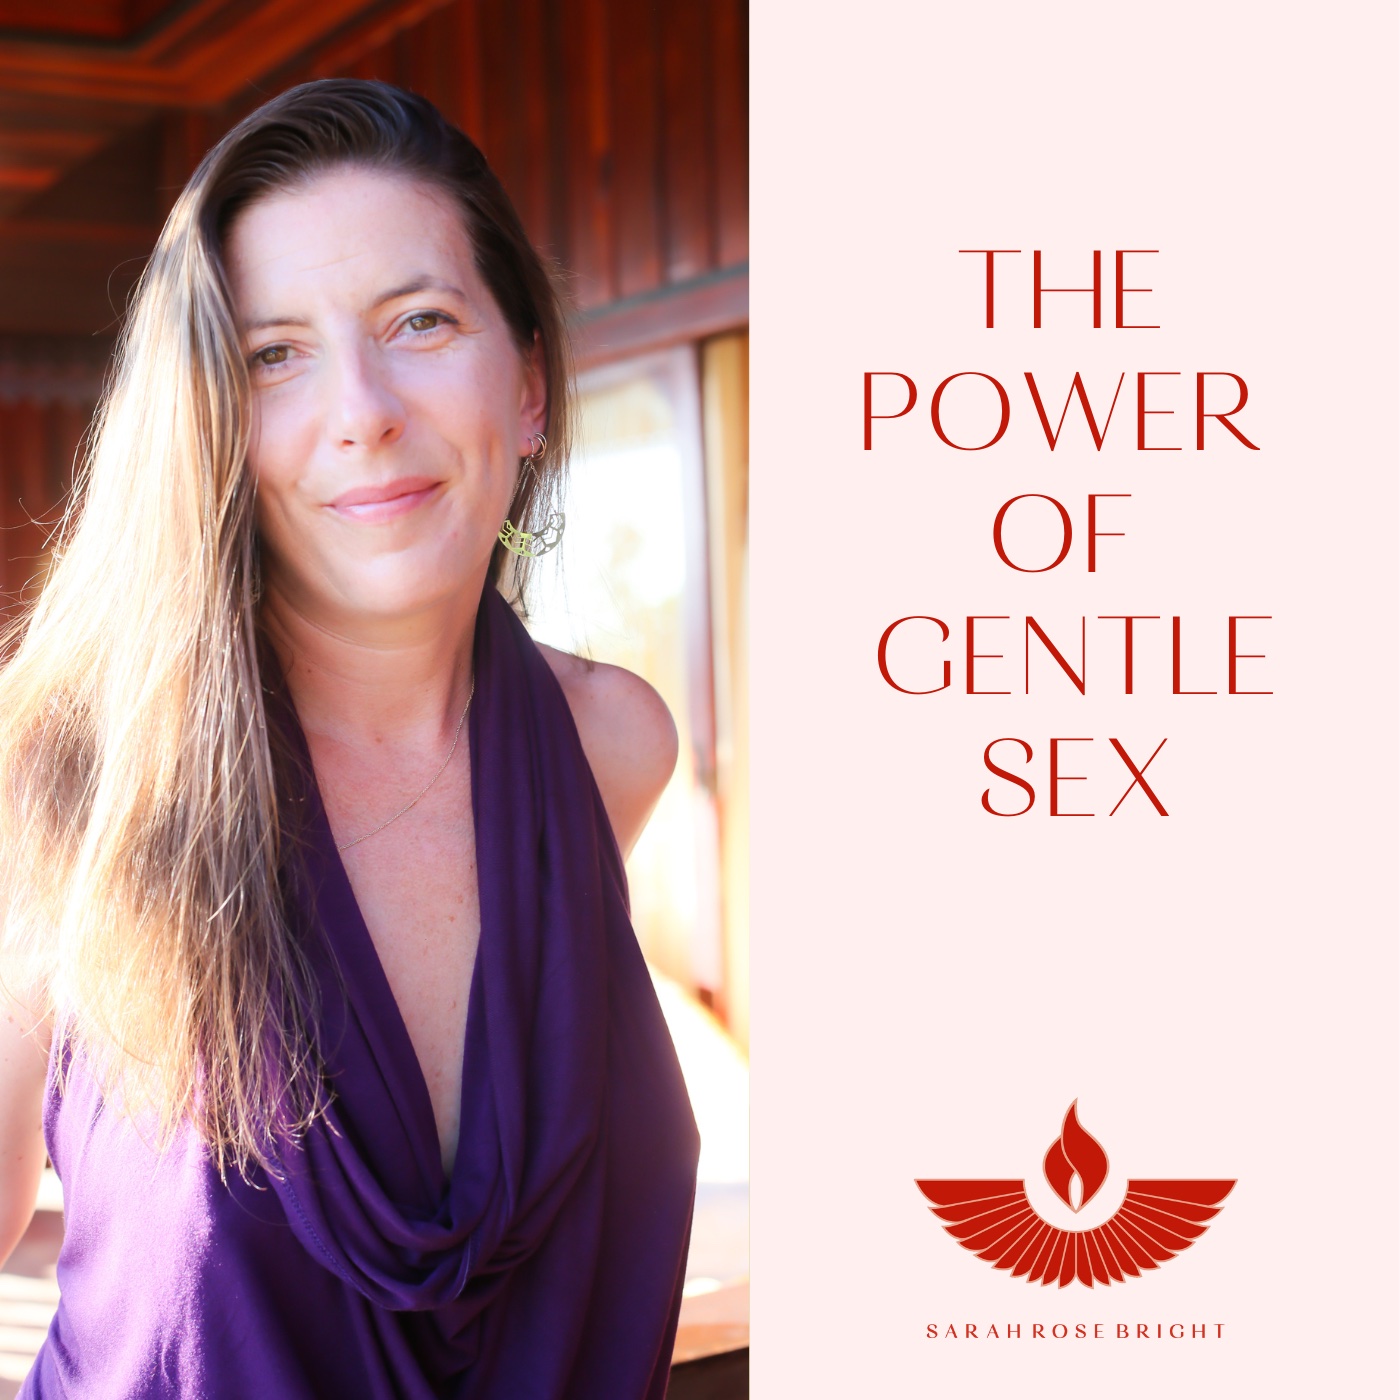 The power of gentle sex